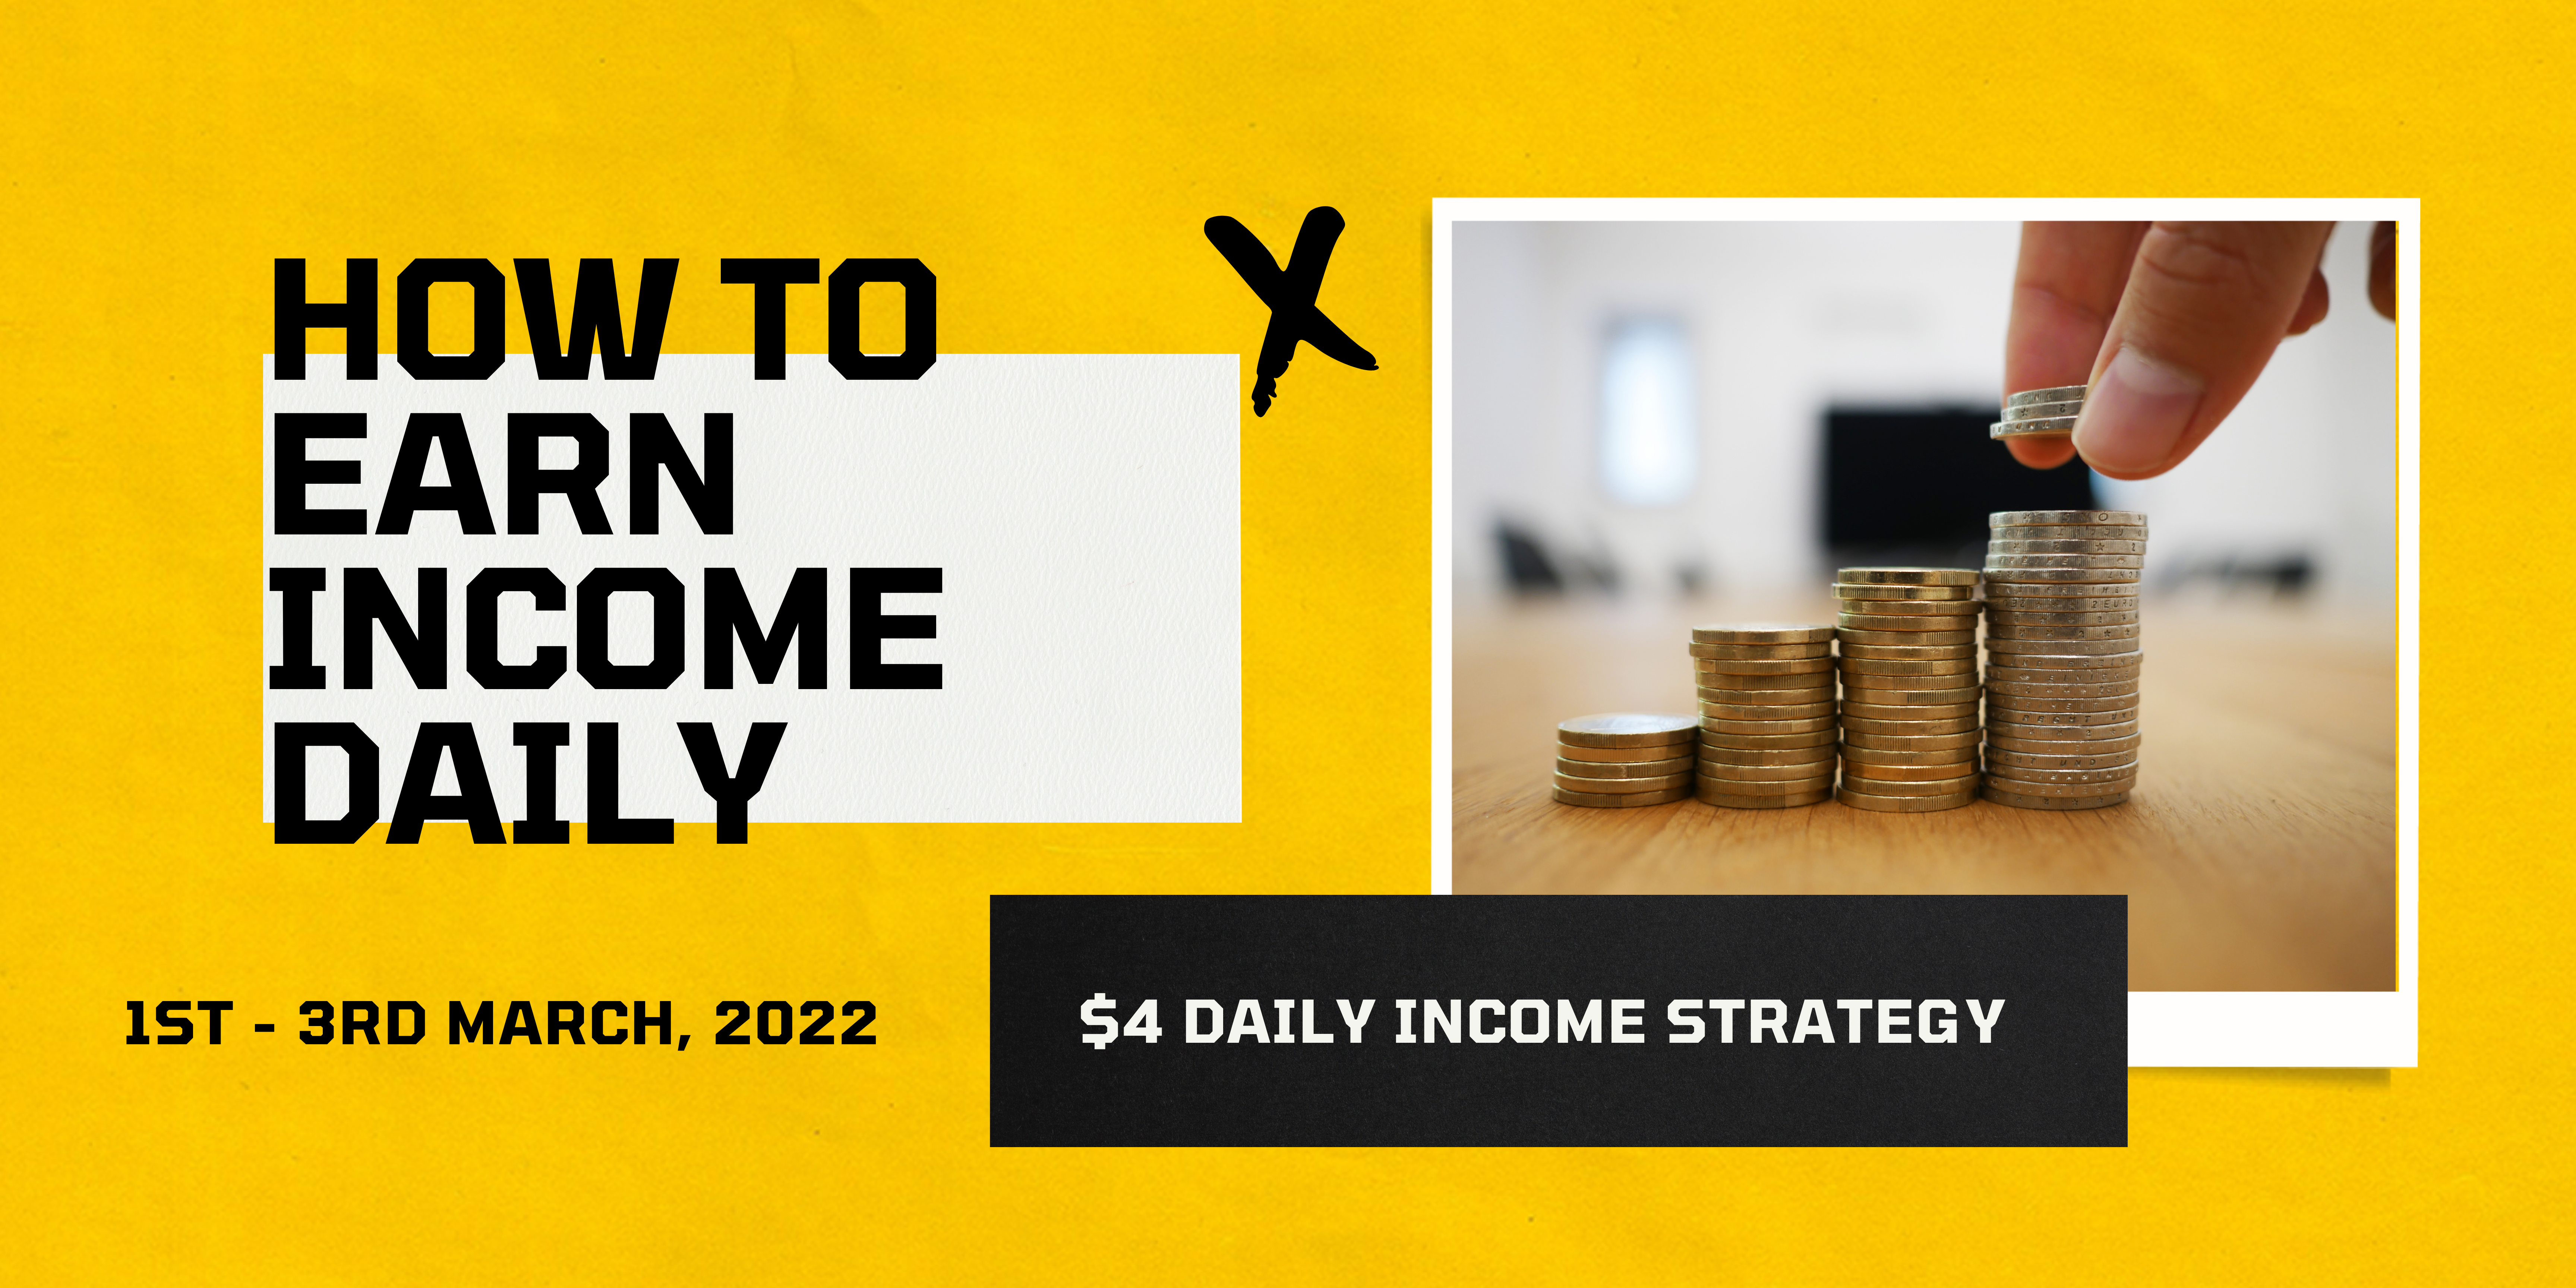 4 dollar a daily strategy